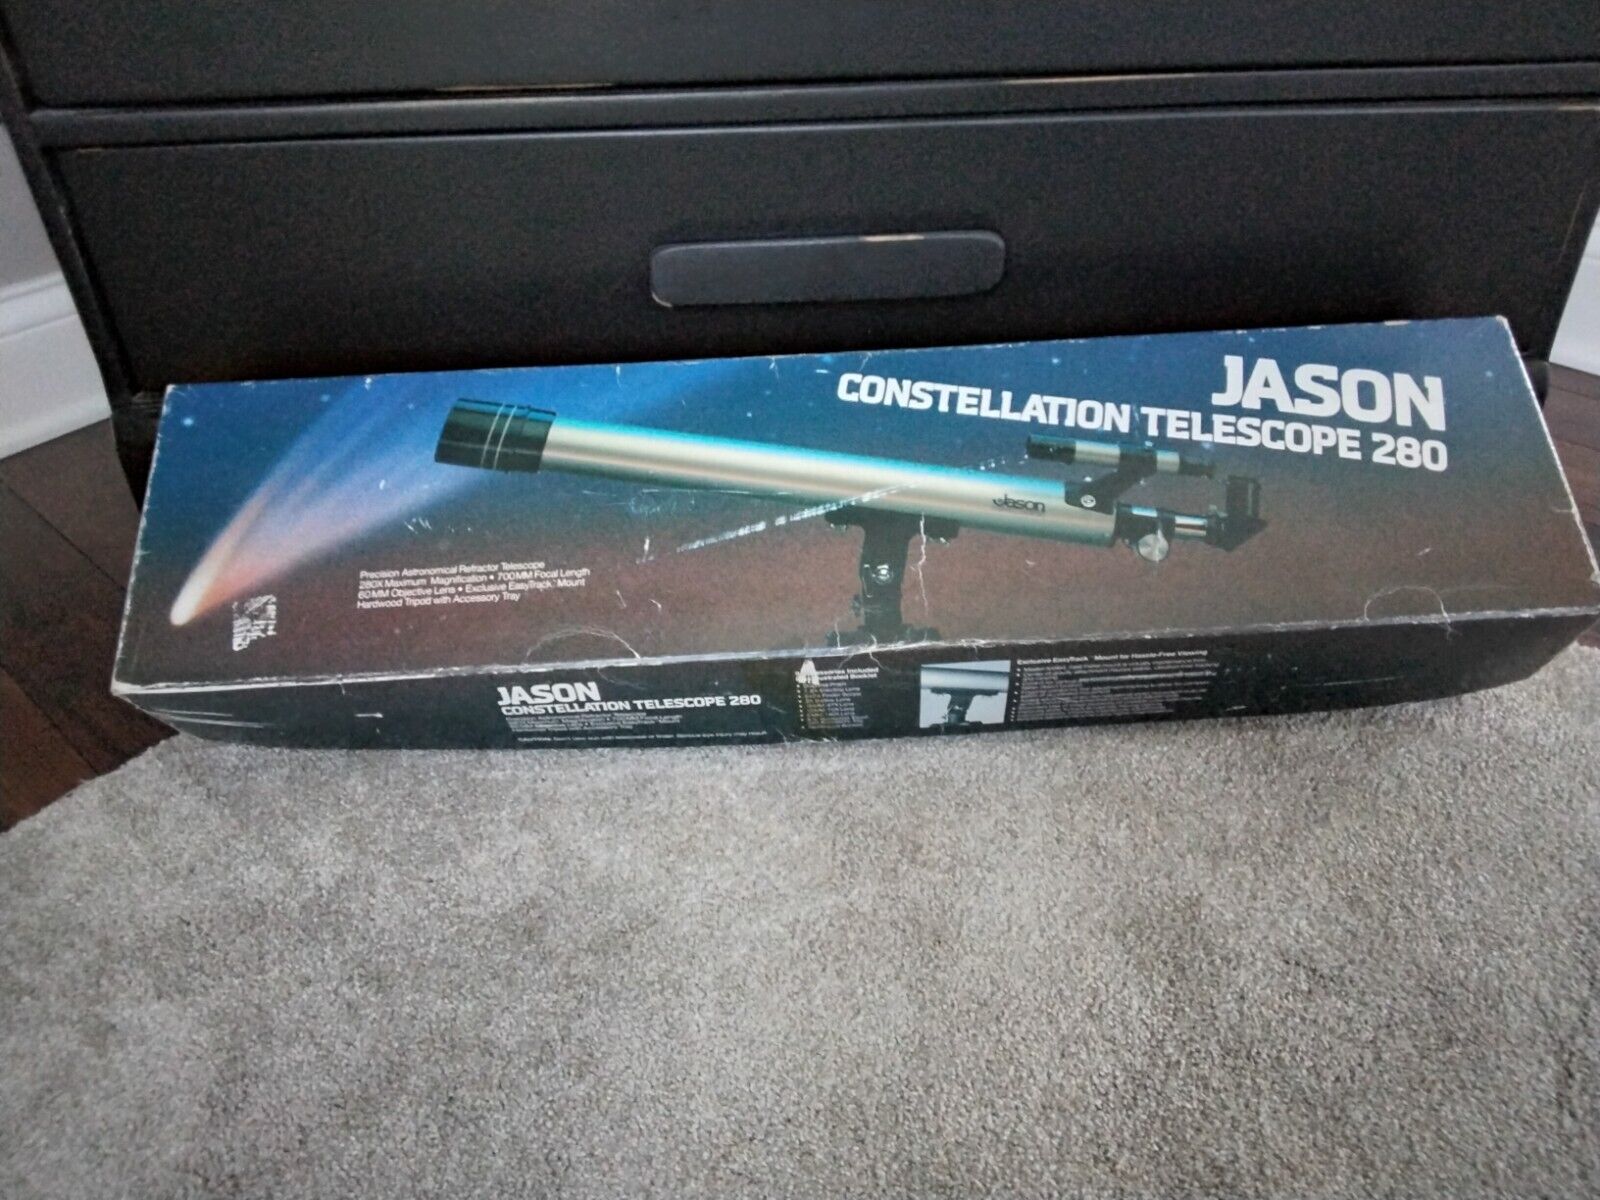 Jason Constellation Telescope 280 Vintage